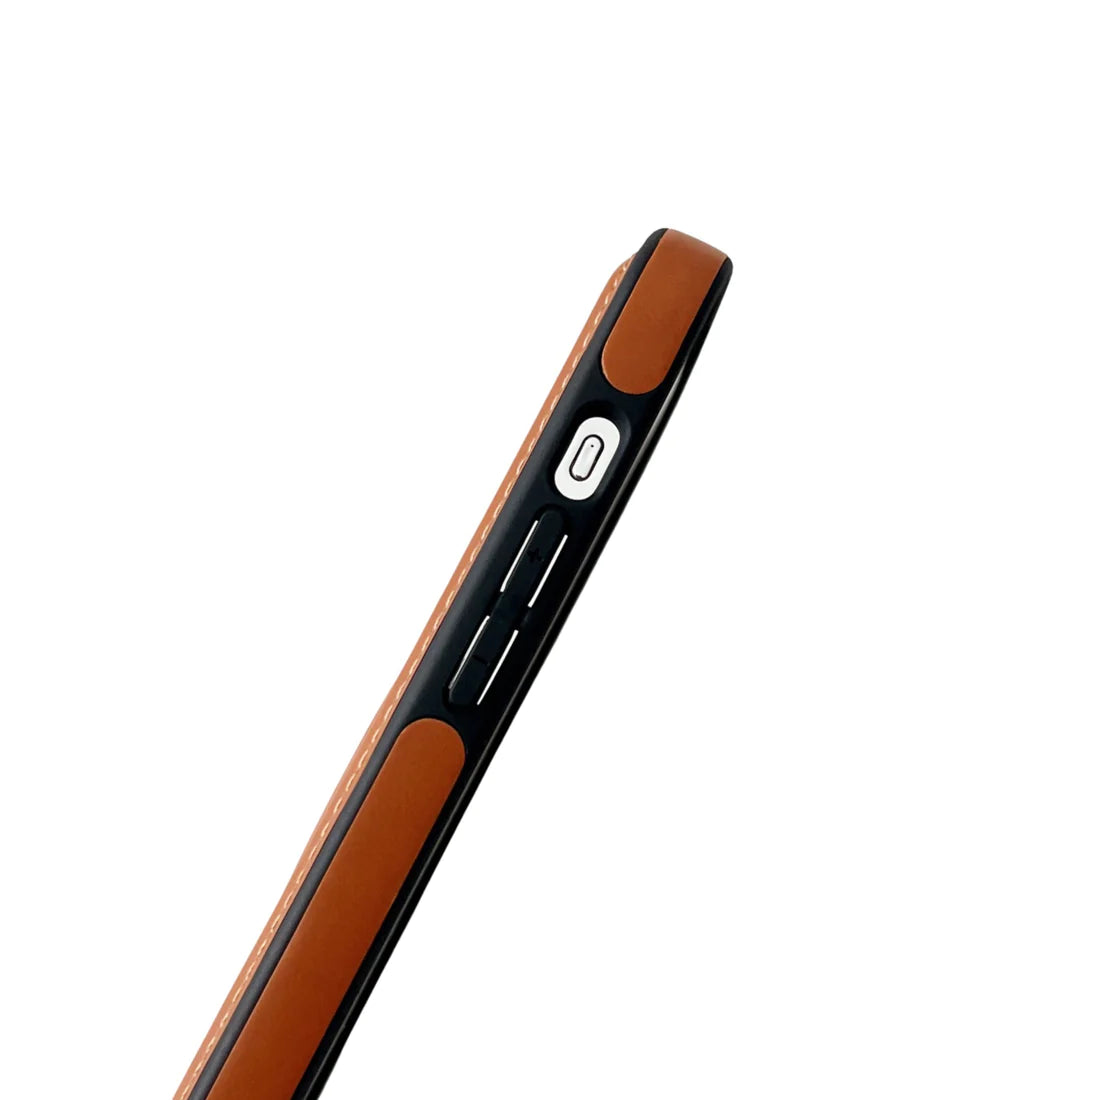 Premium Leather Shockproof Magnetic iPhone Case